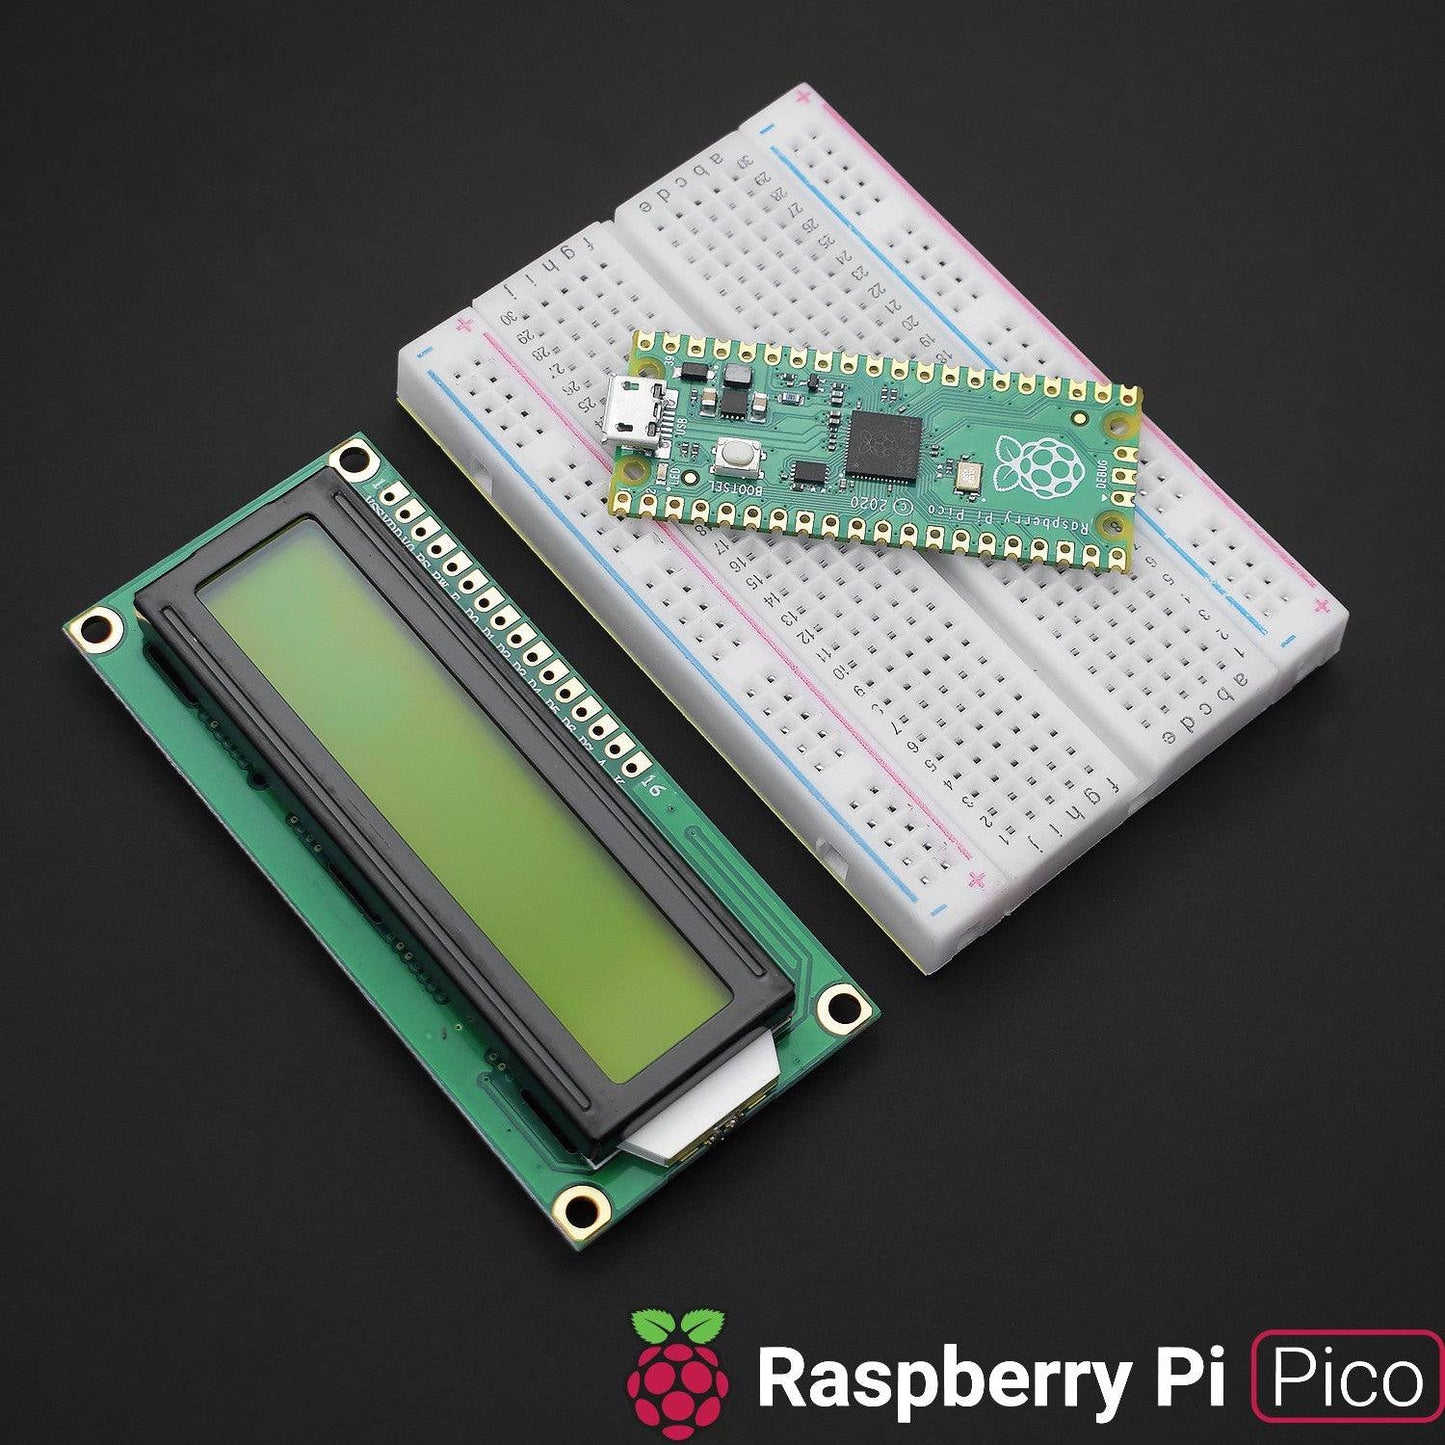 Raspberry Pi Pico (RP2040) Starter Kit for Raspberry Pi Pico microcontroller development Board- KT1272 - REES52